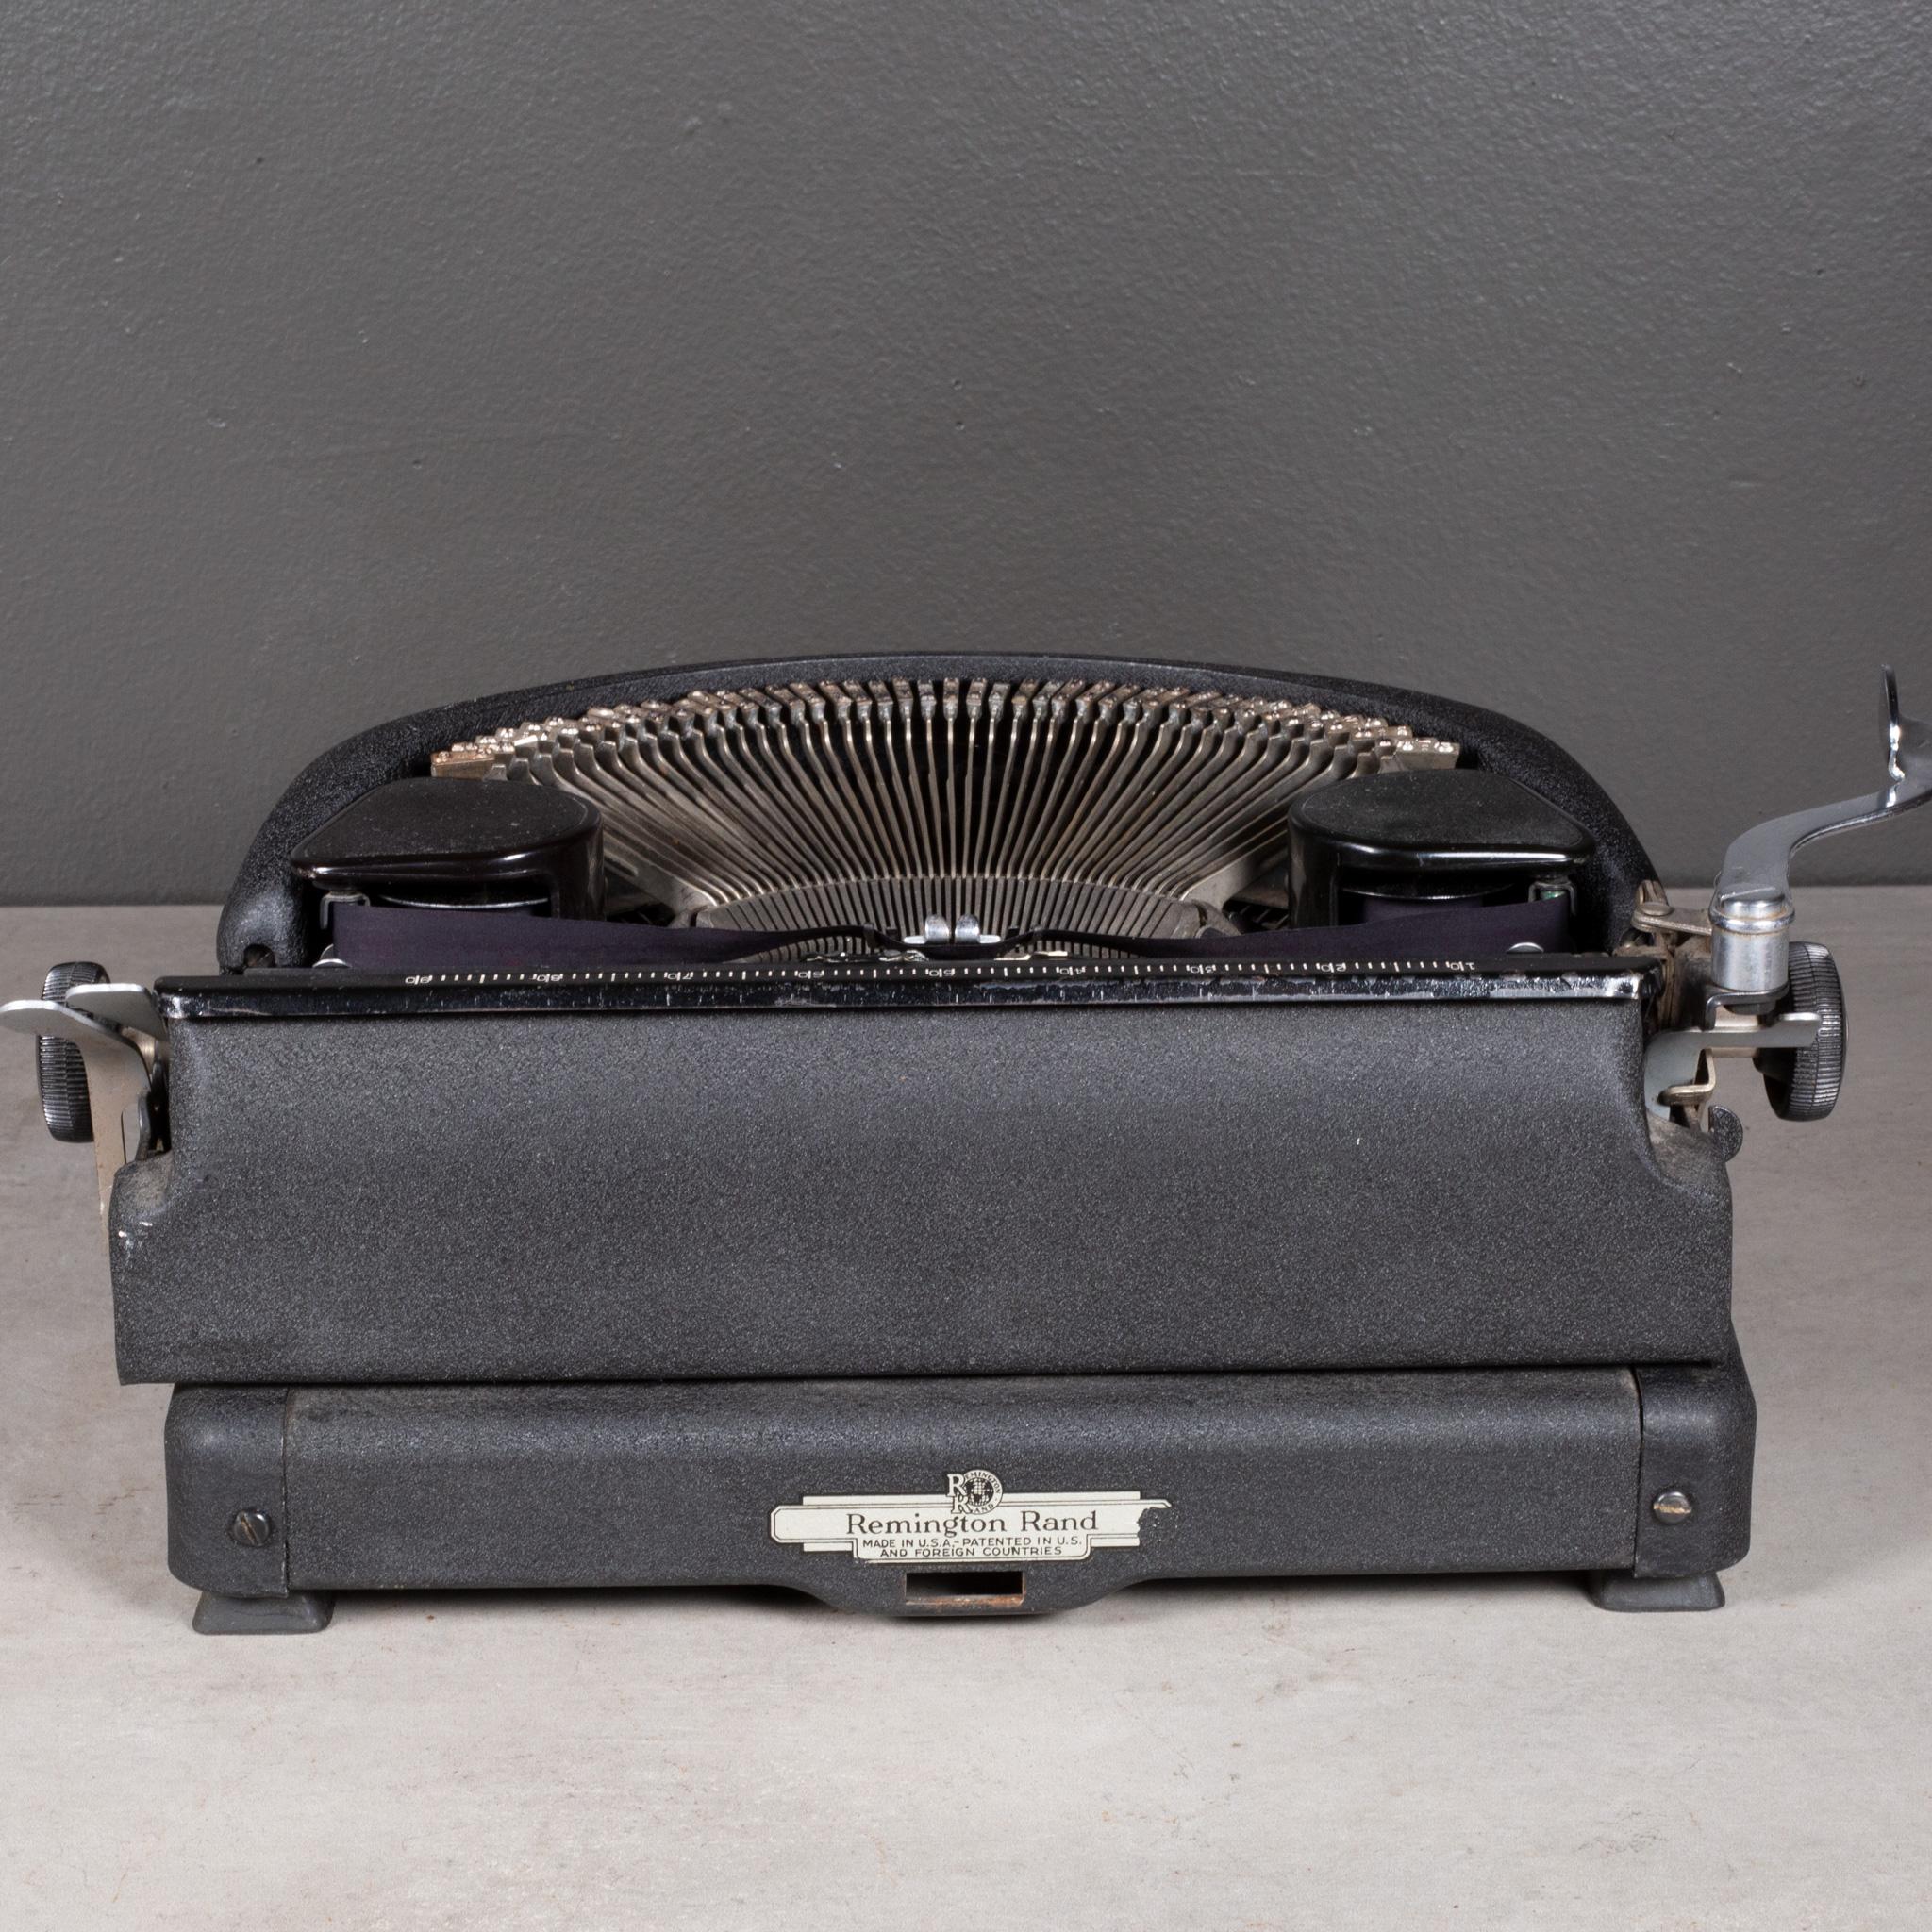 Industrial Antique Remington Rand Deluxe Model 5 Typewriter c.1941